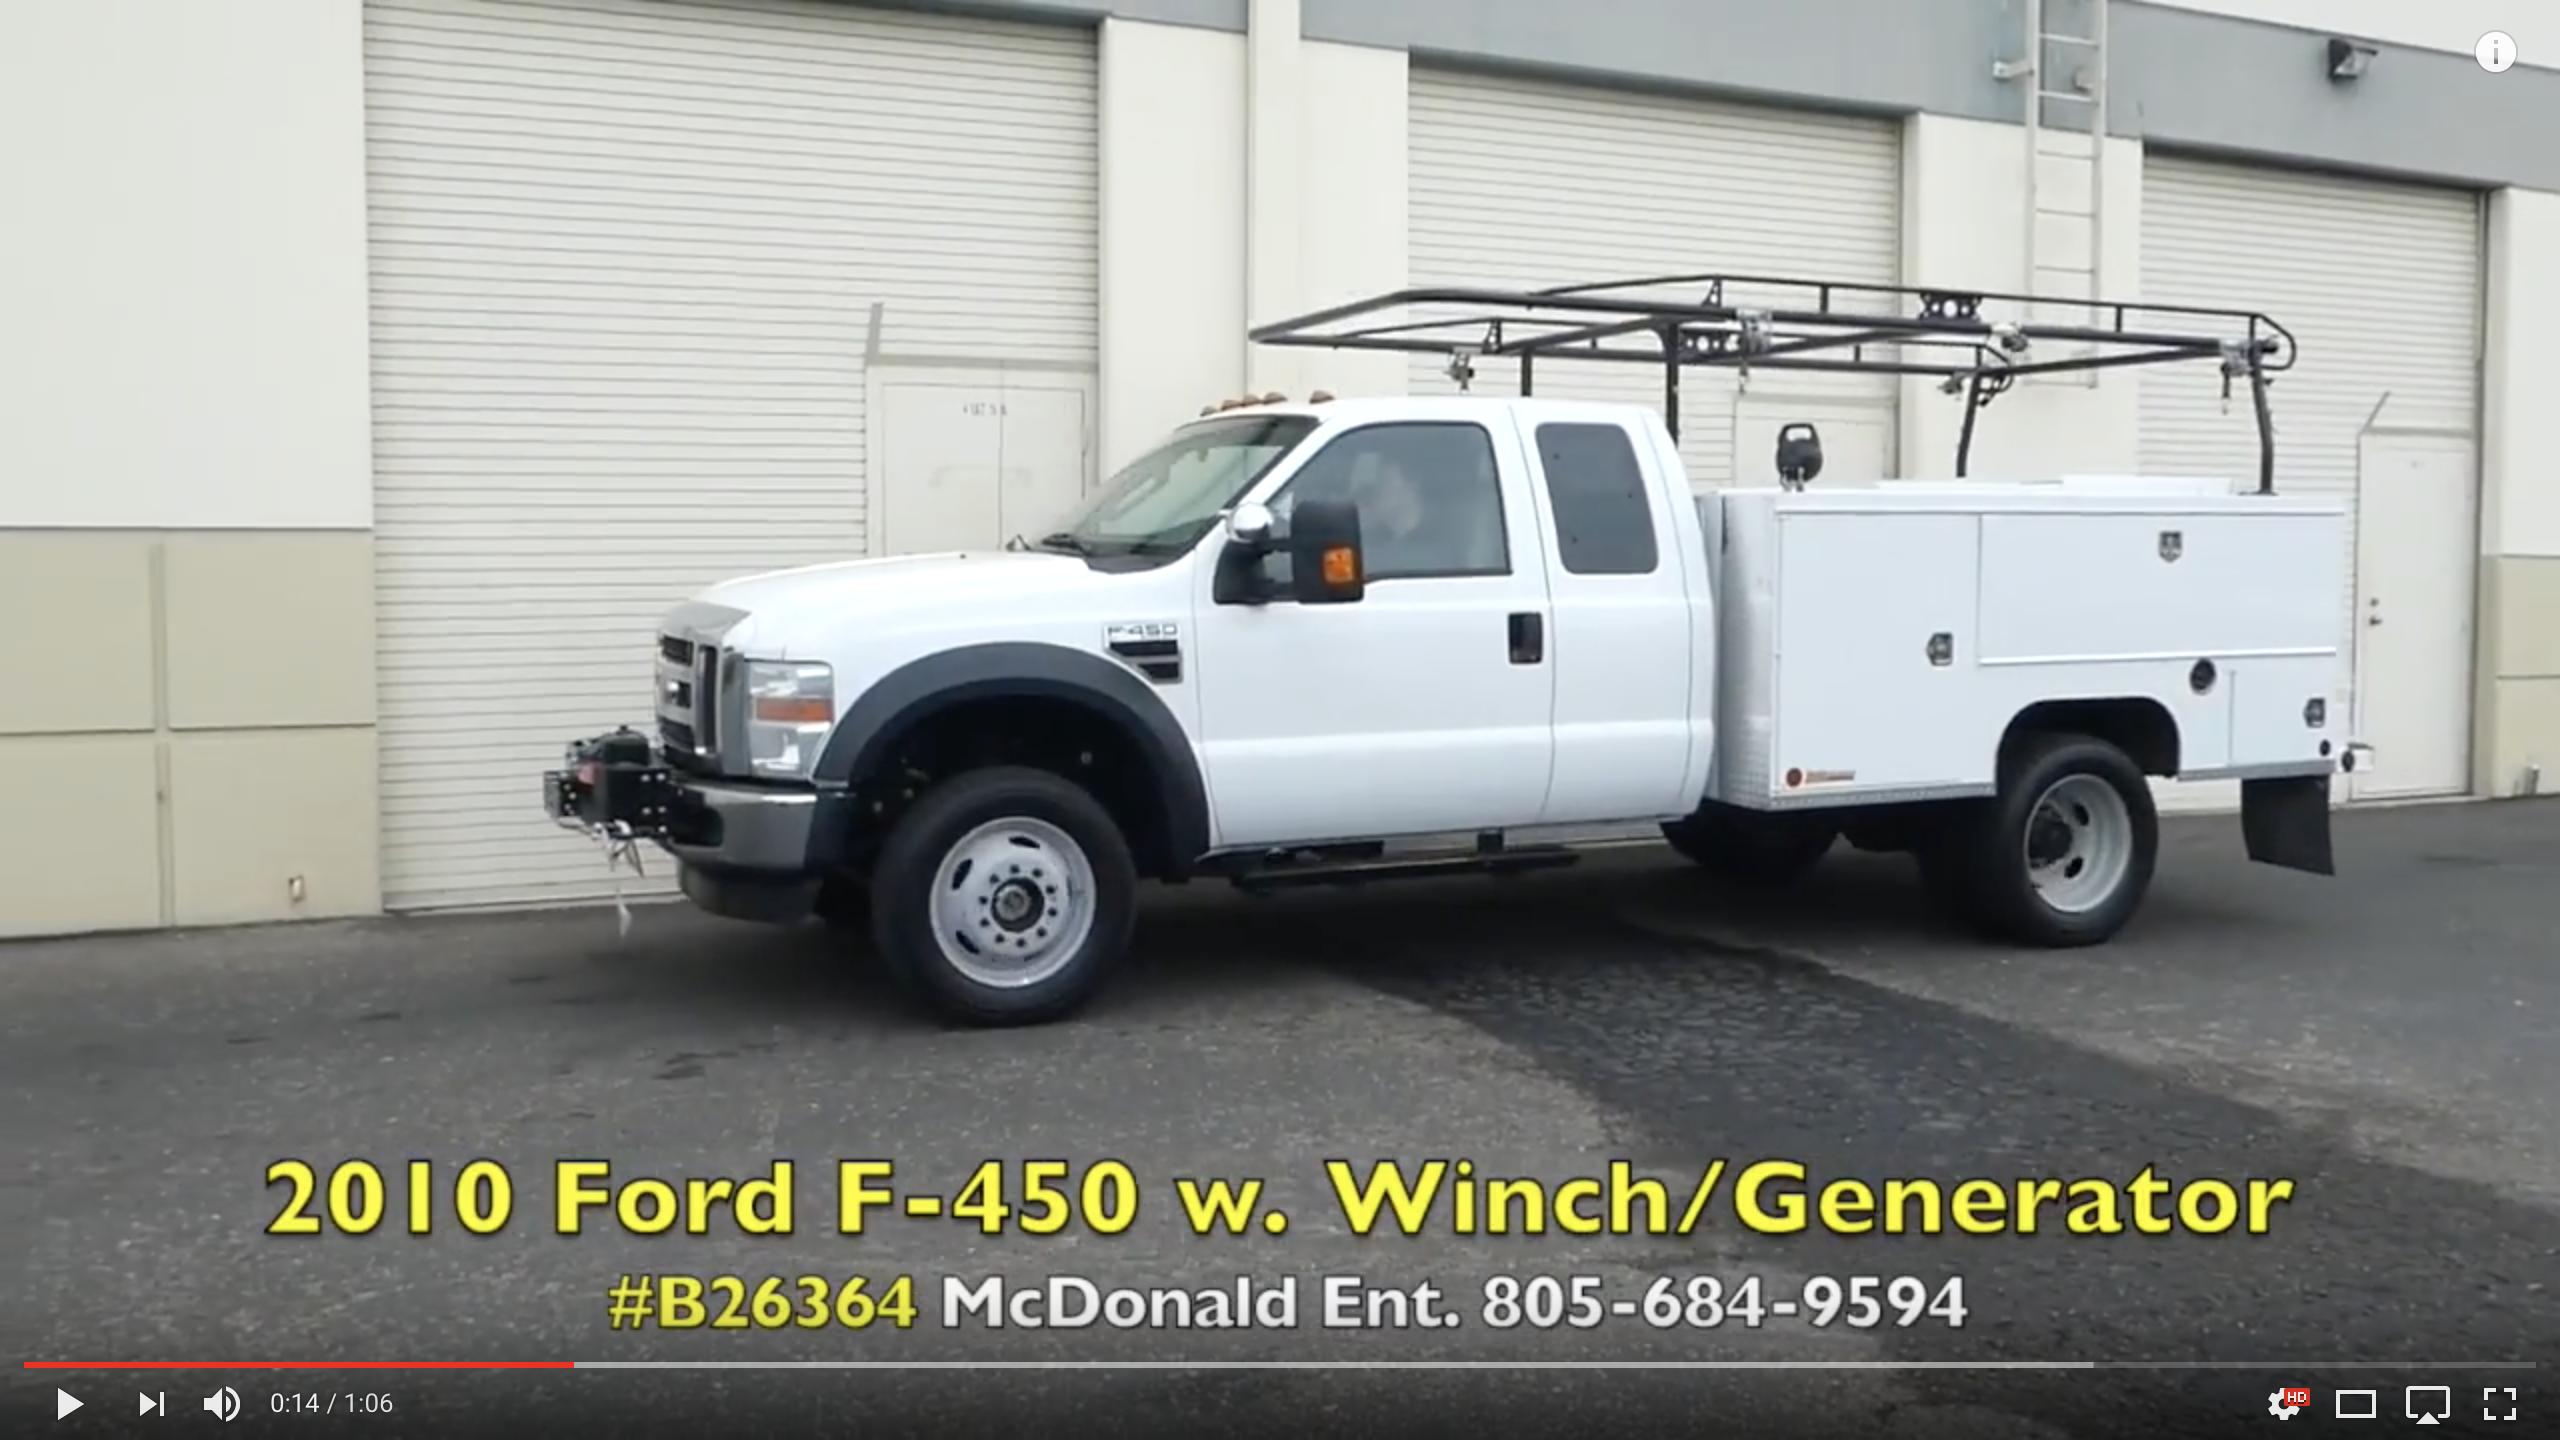 2010 Ford F-450 4 x 4 Service Truck w/ Crane & Air Compressor on YouTube